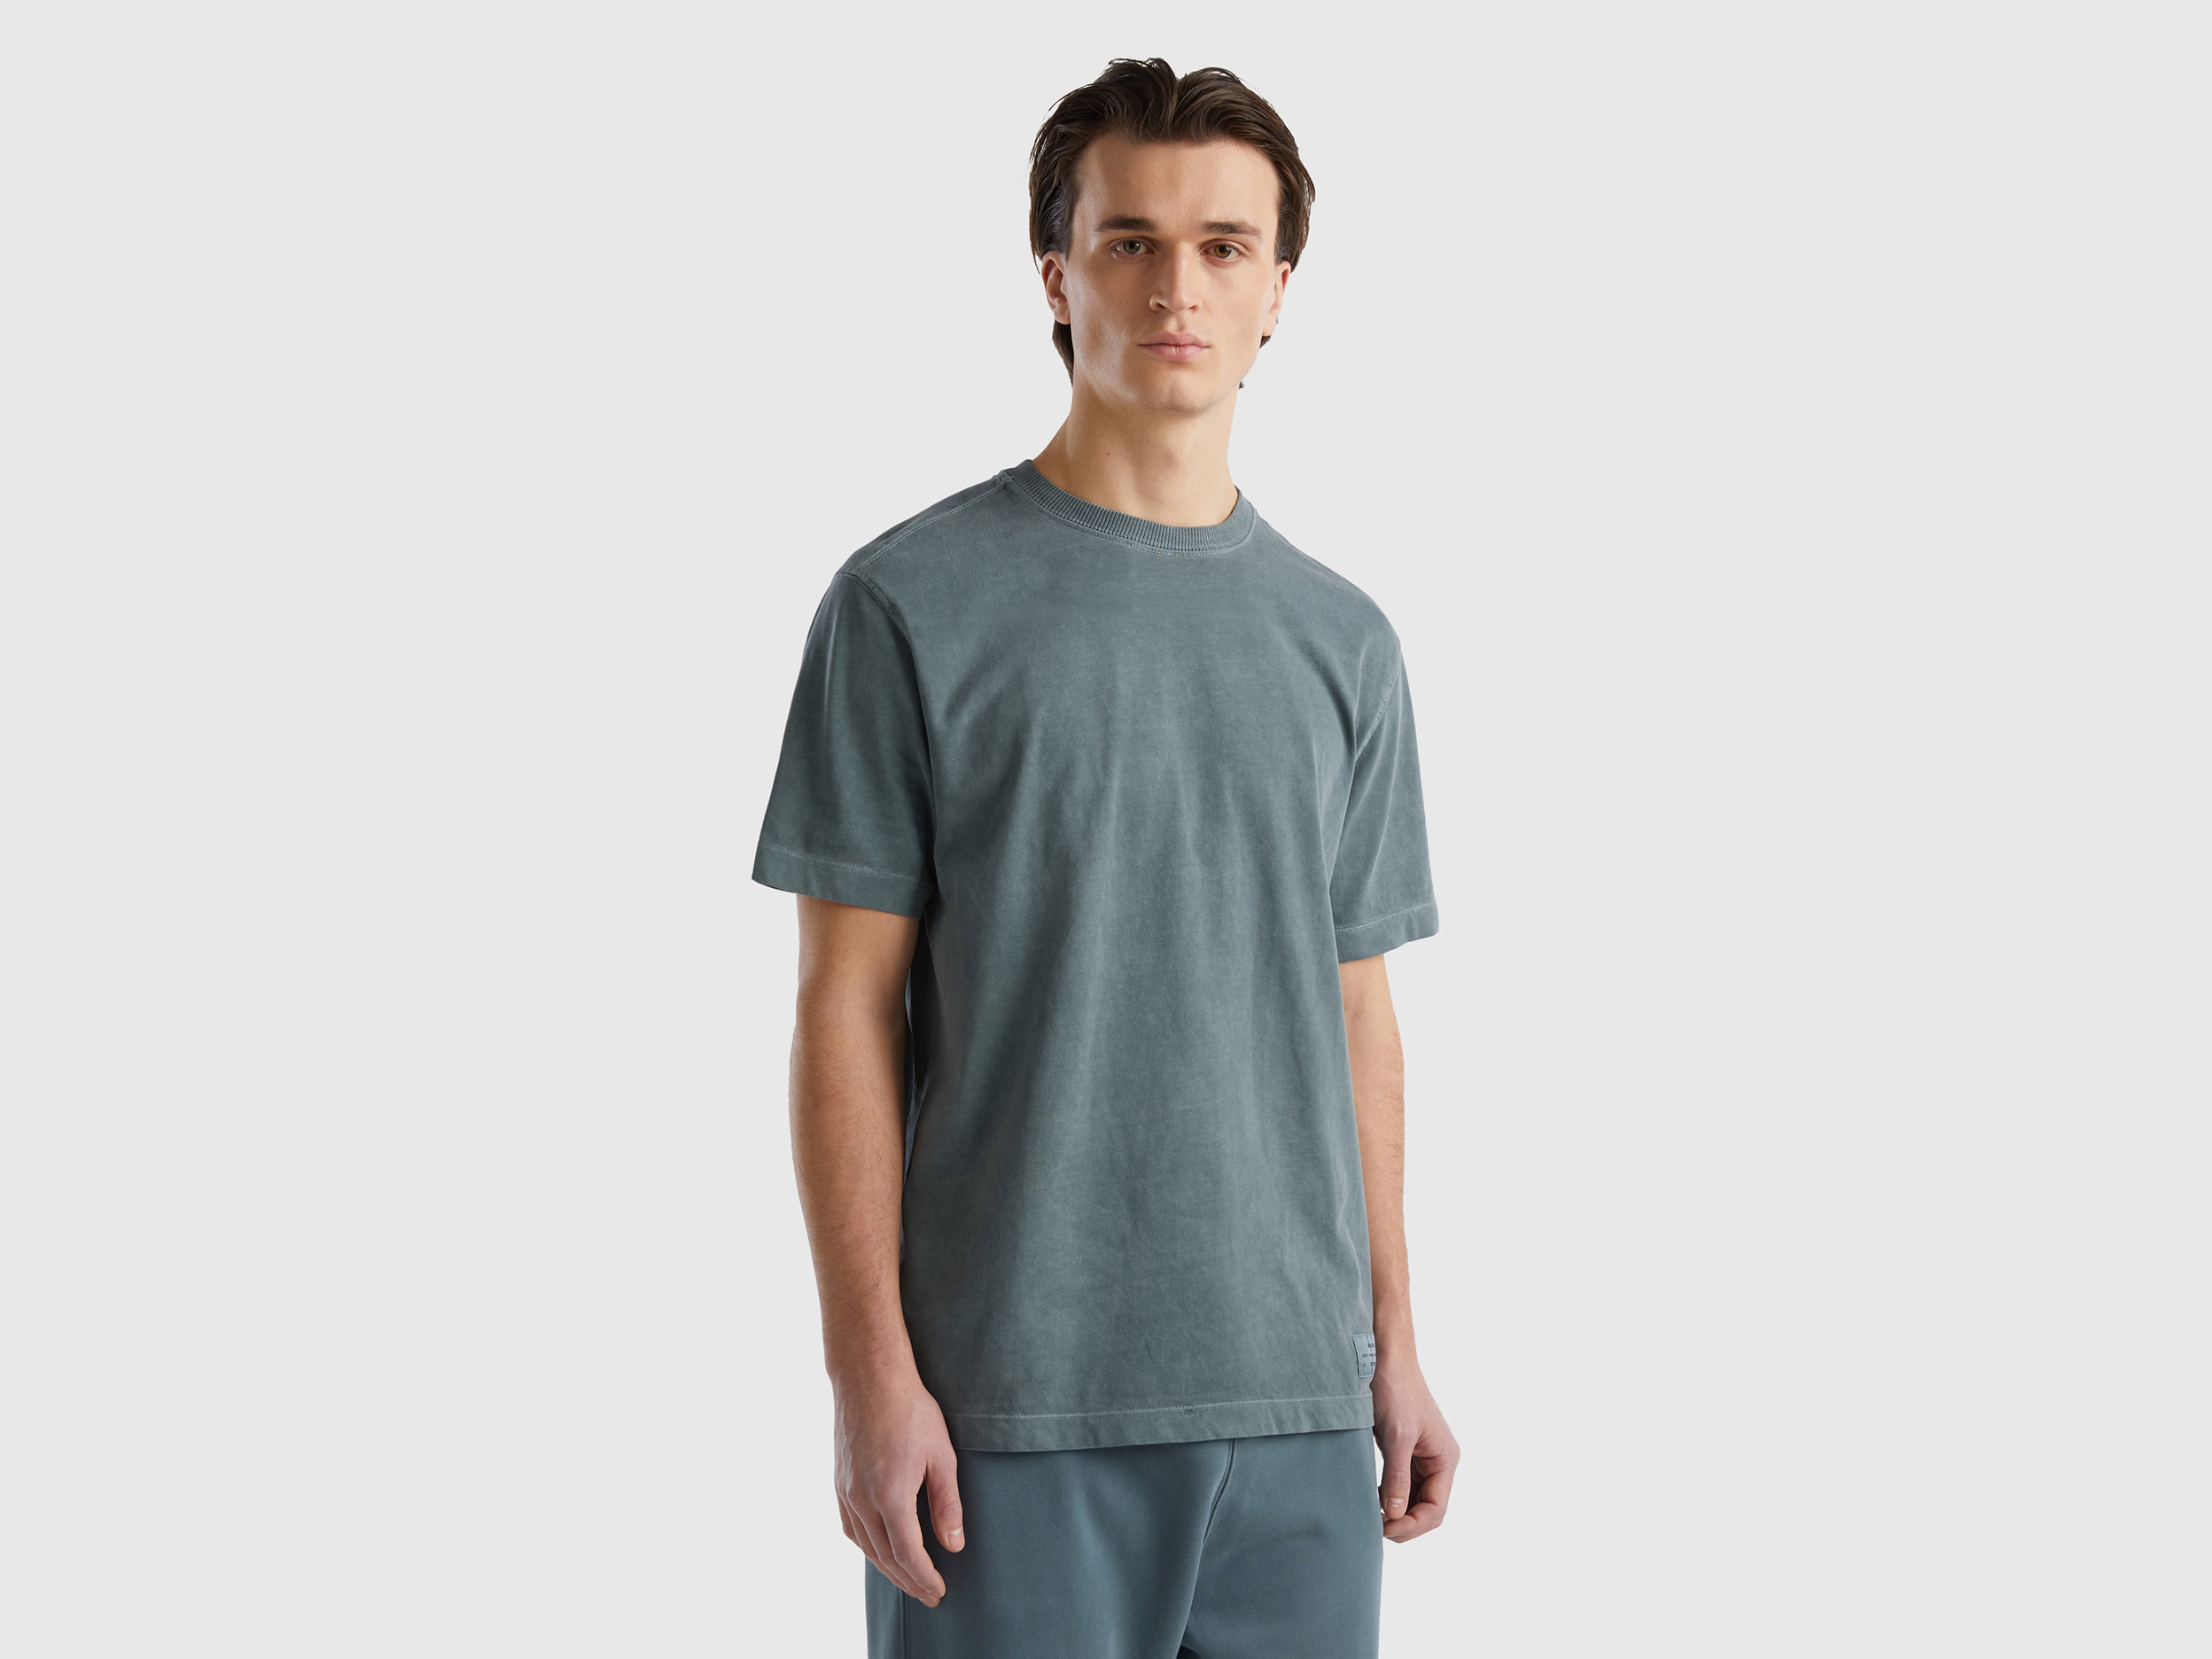 Benetton, 100% Organic Cotton Crew Neck T-shirt, size XXXL, Dark Gray, Men